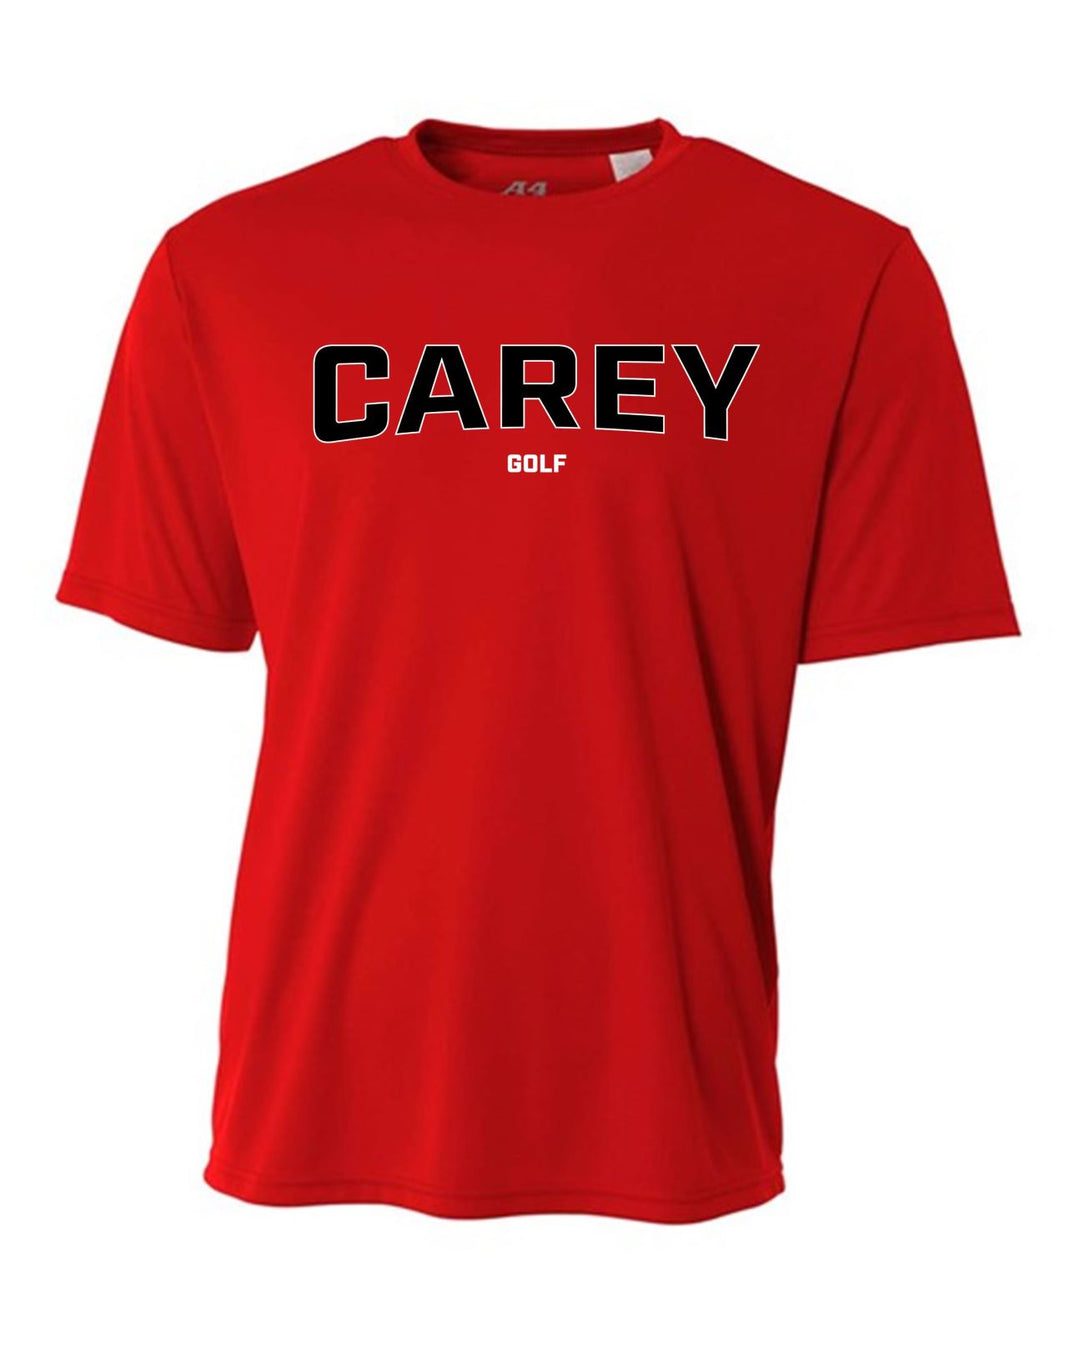 WCU Golf Men's Short-Sleeve Performance Shirt WCU Golf Red CAREY - Third Coast Soccer